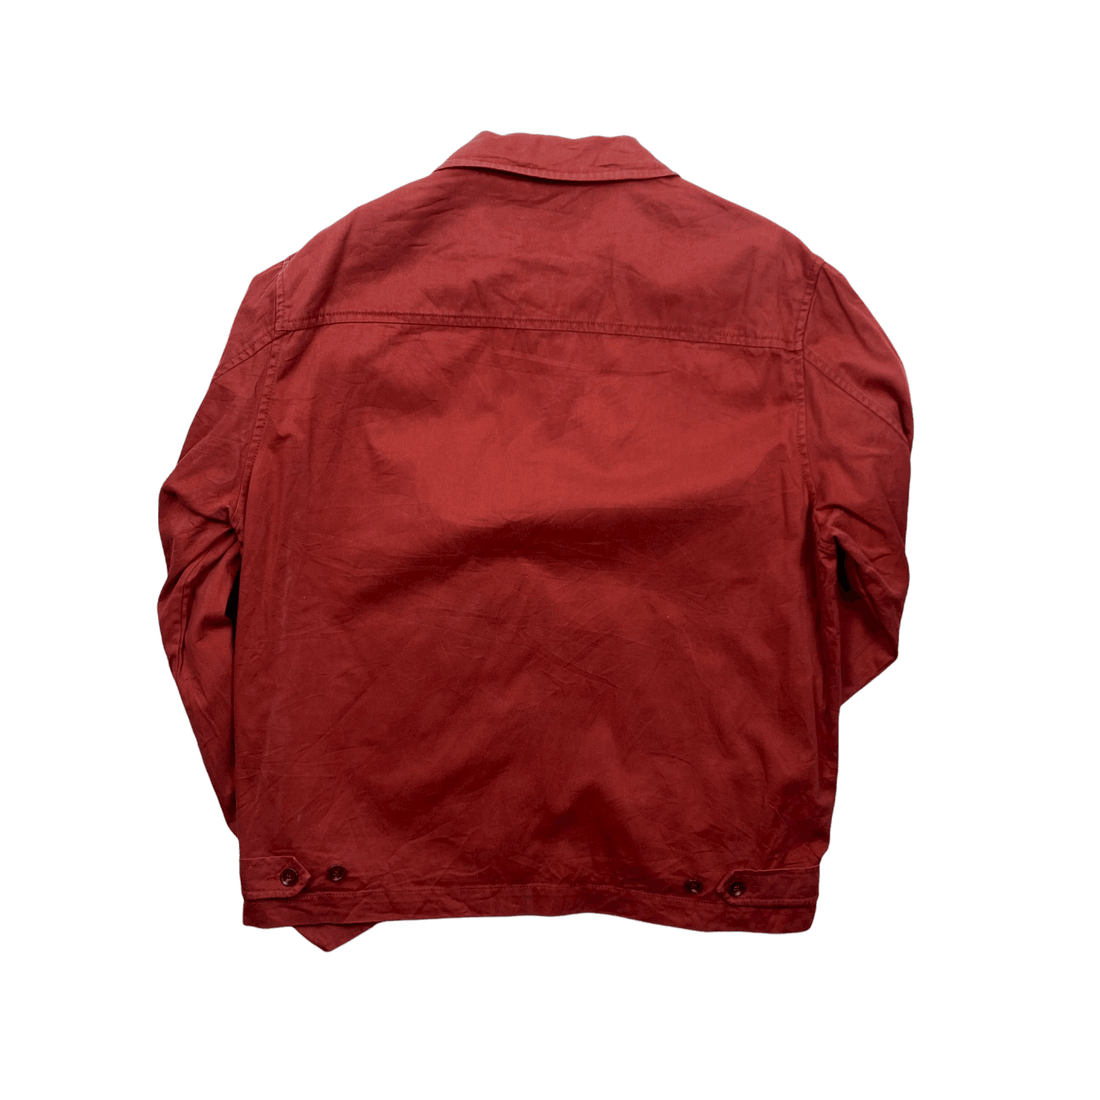 Vintage 90s Red Ralph Lauren Polo Sport Harrington Jacket - Medium (Recommended Size - Small) - The Streetwear Studio